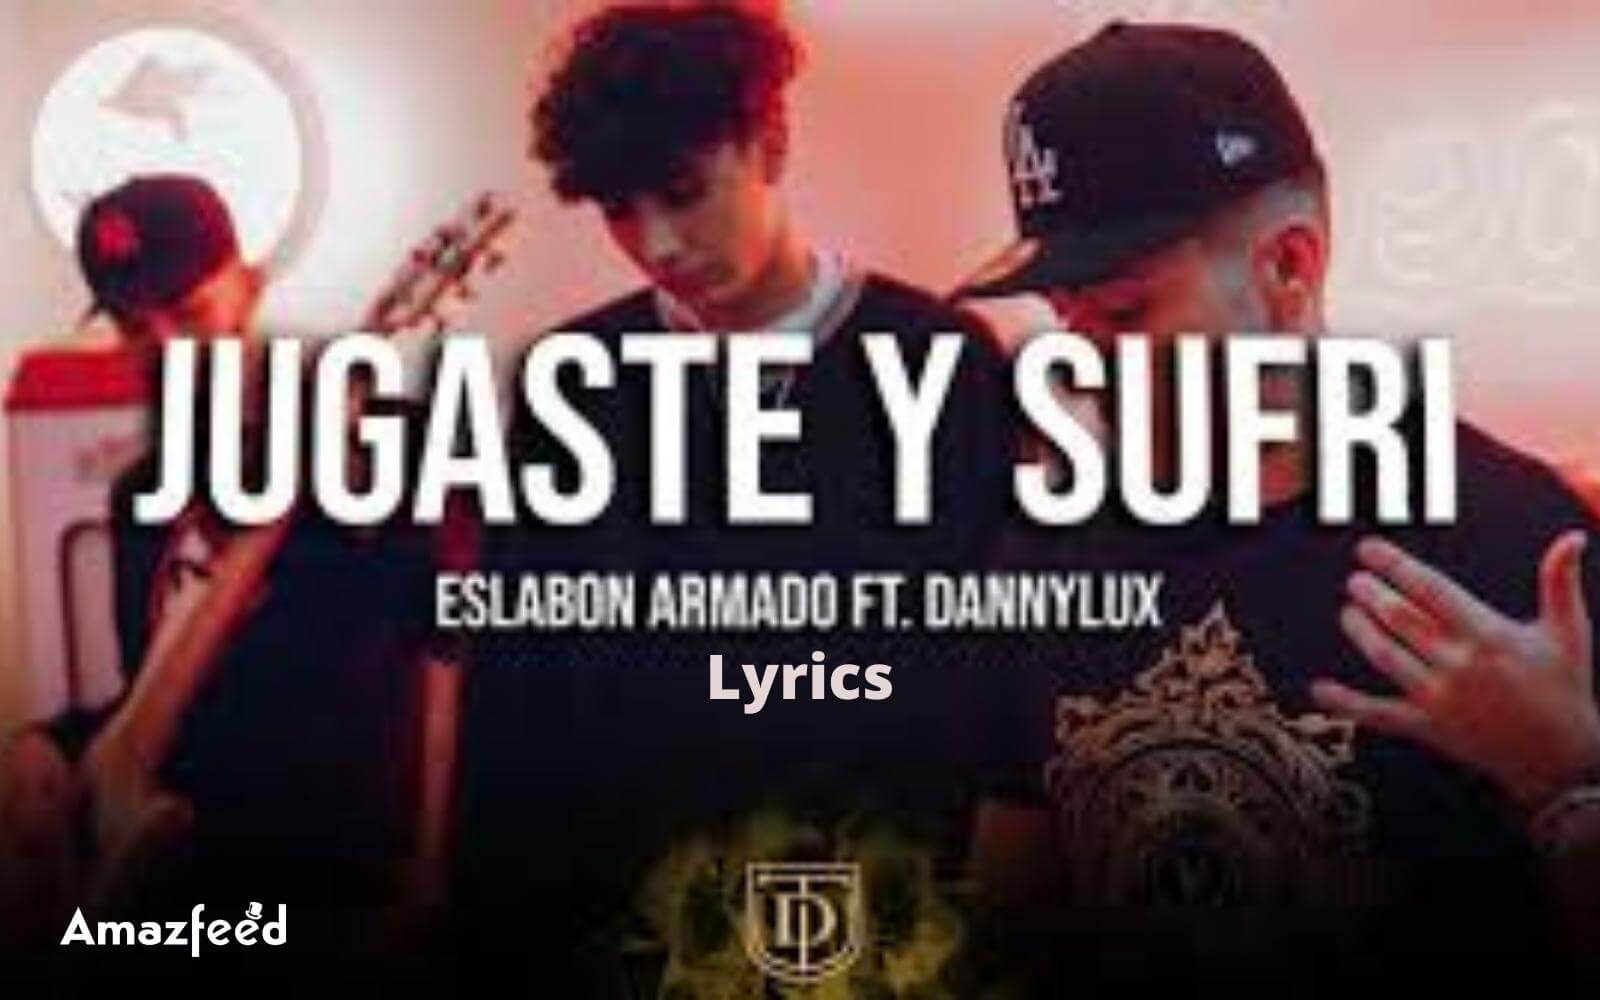 Jugaste y sufrí - Eslabon Armado ft. Danny Lux Song Lyrics English Translation